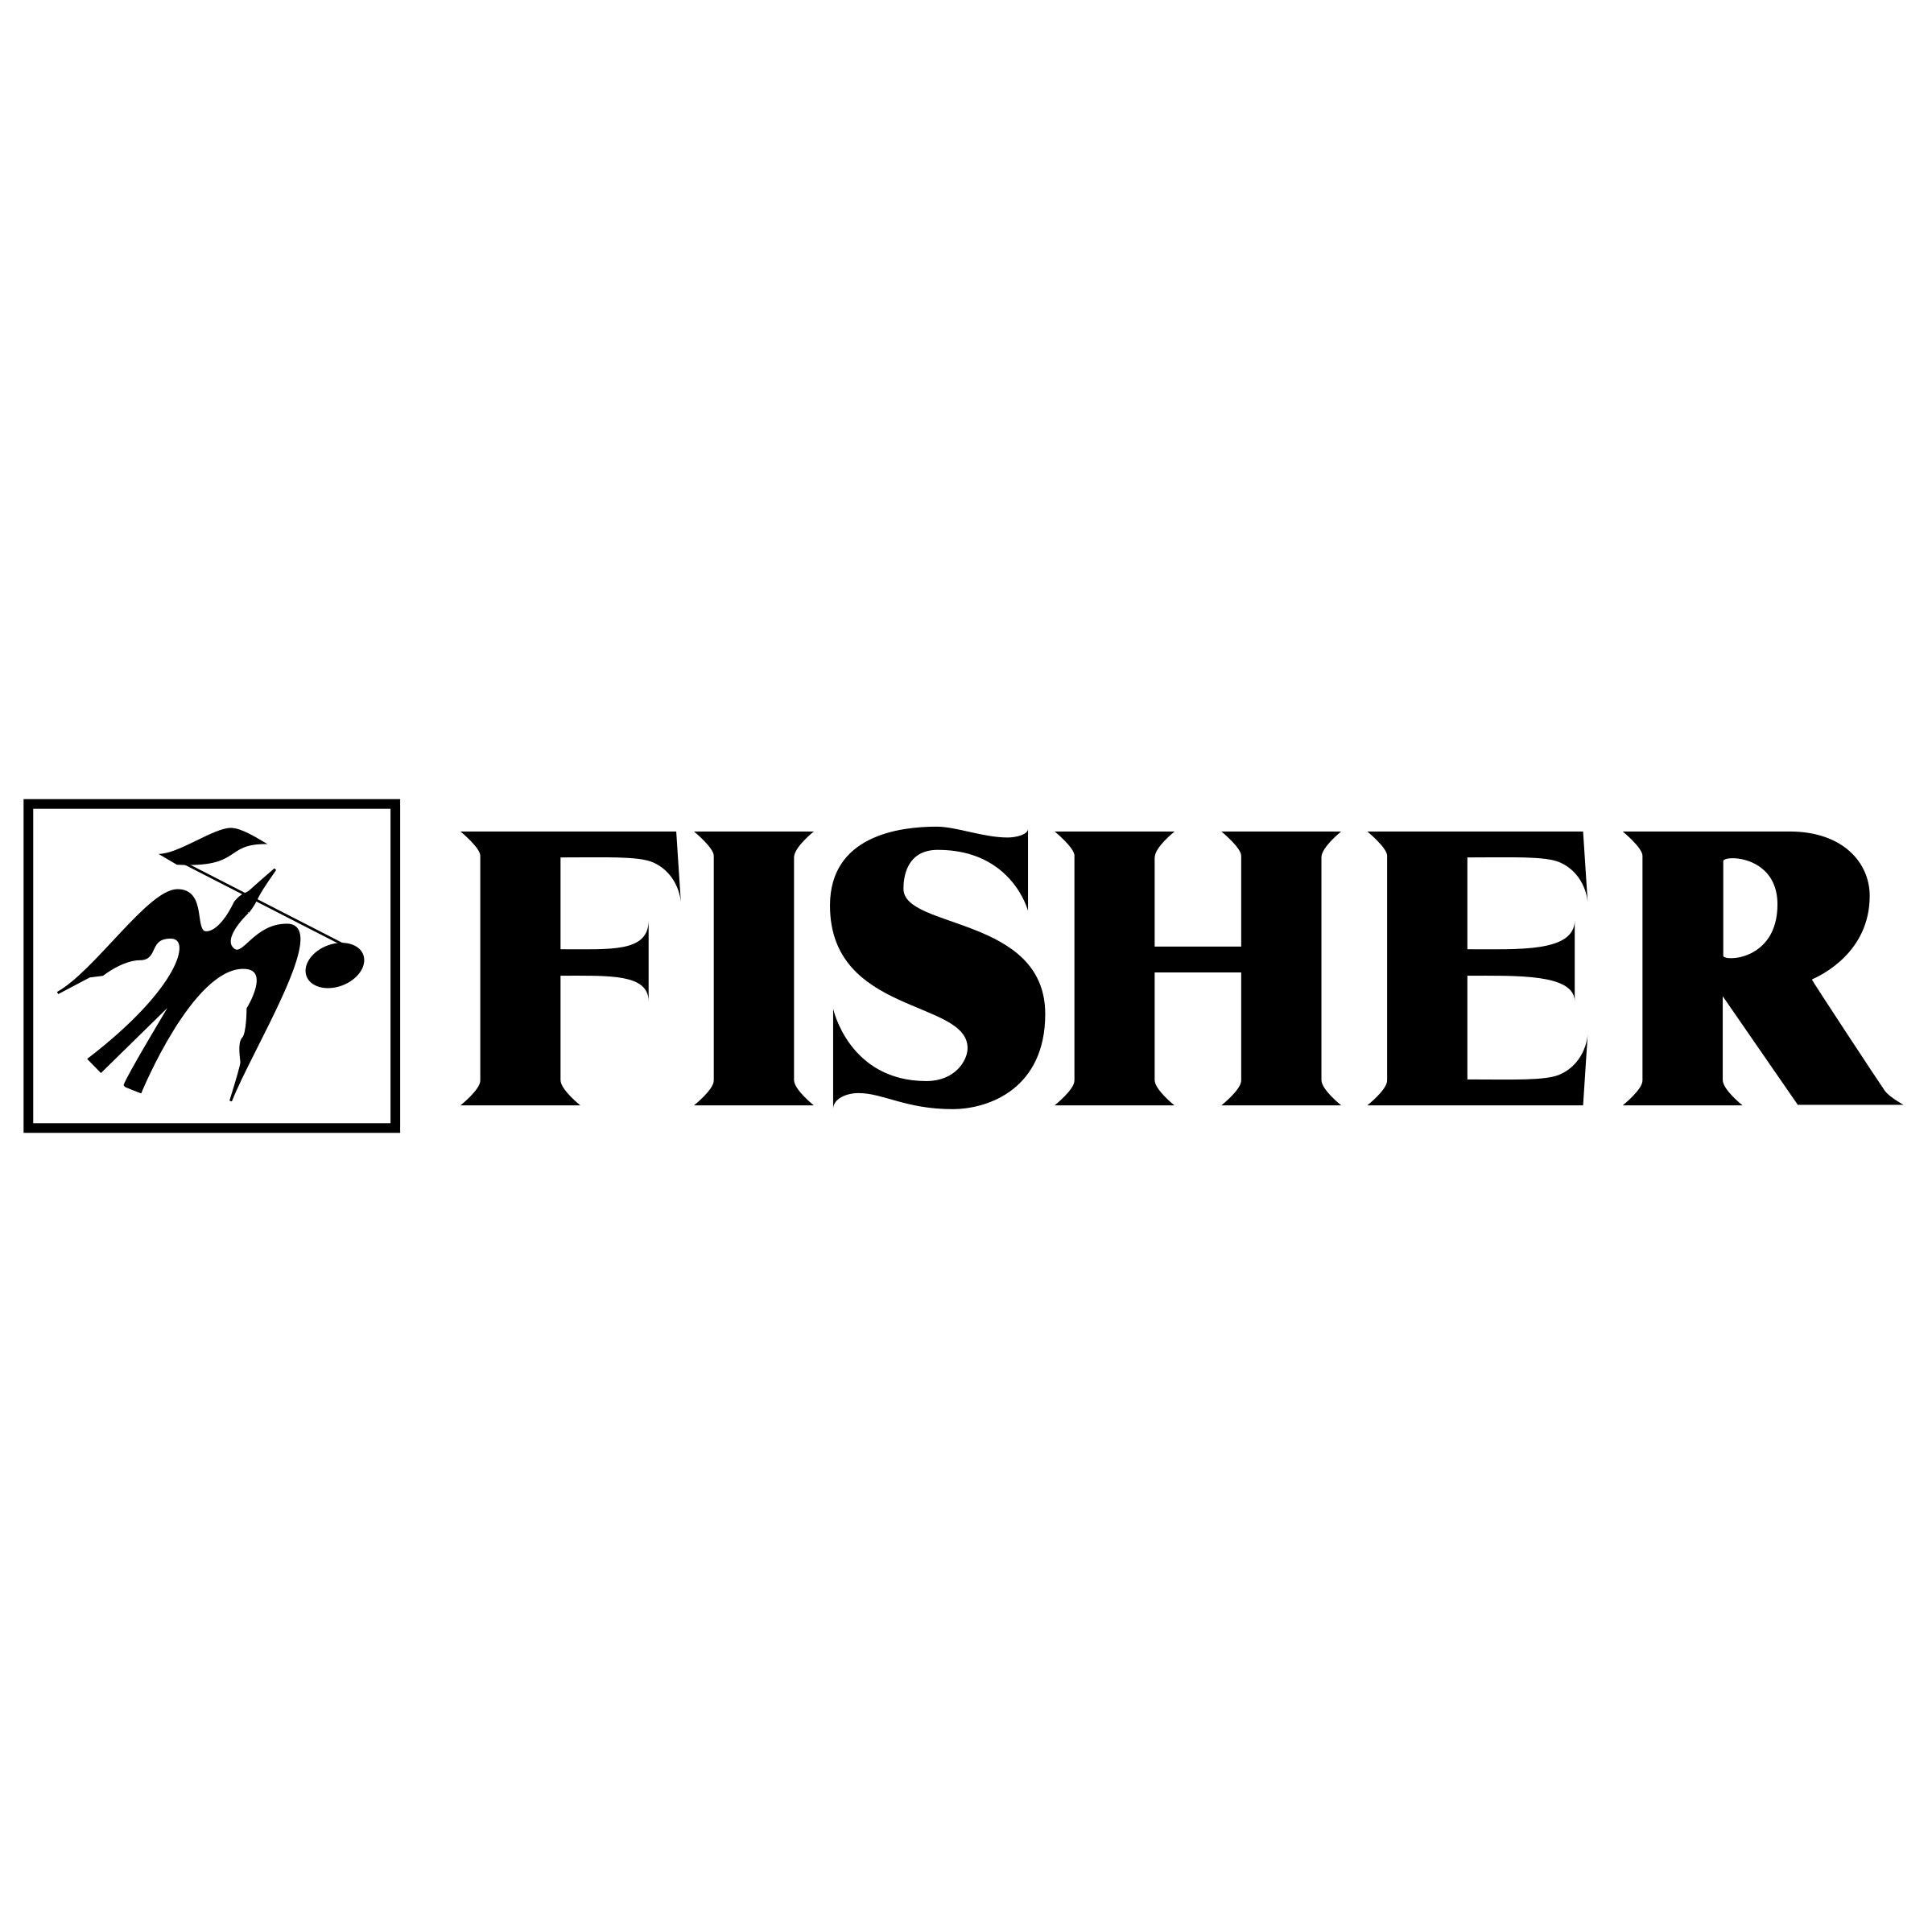 The Fisher Logo - Fisher Logo PNG Transparent & SVG Vector